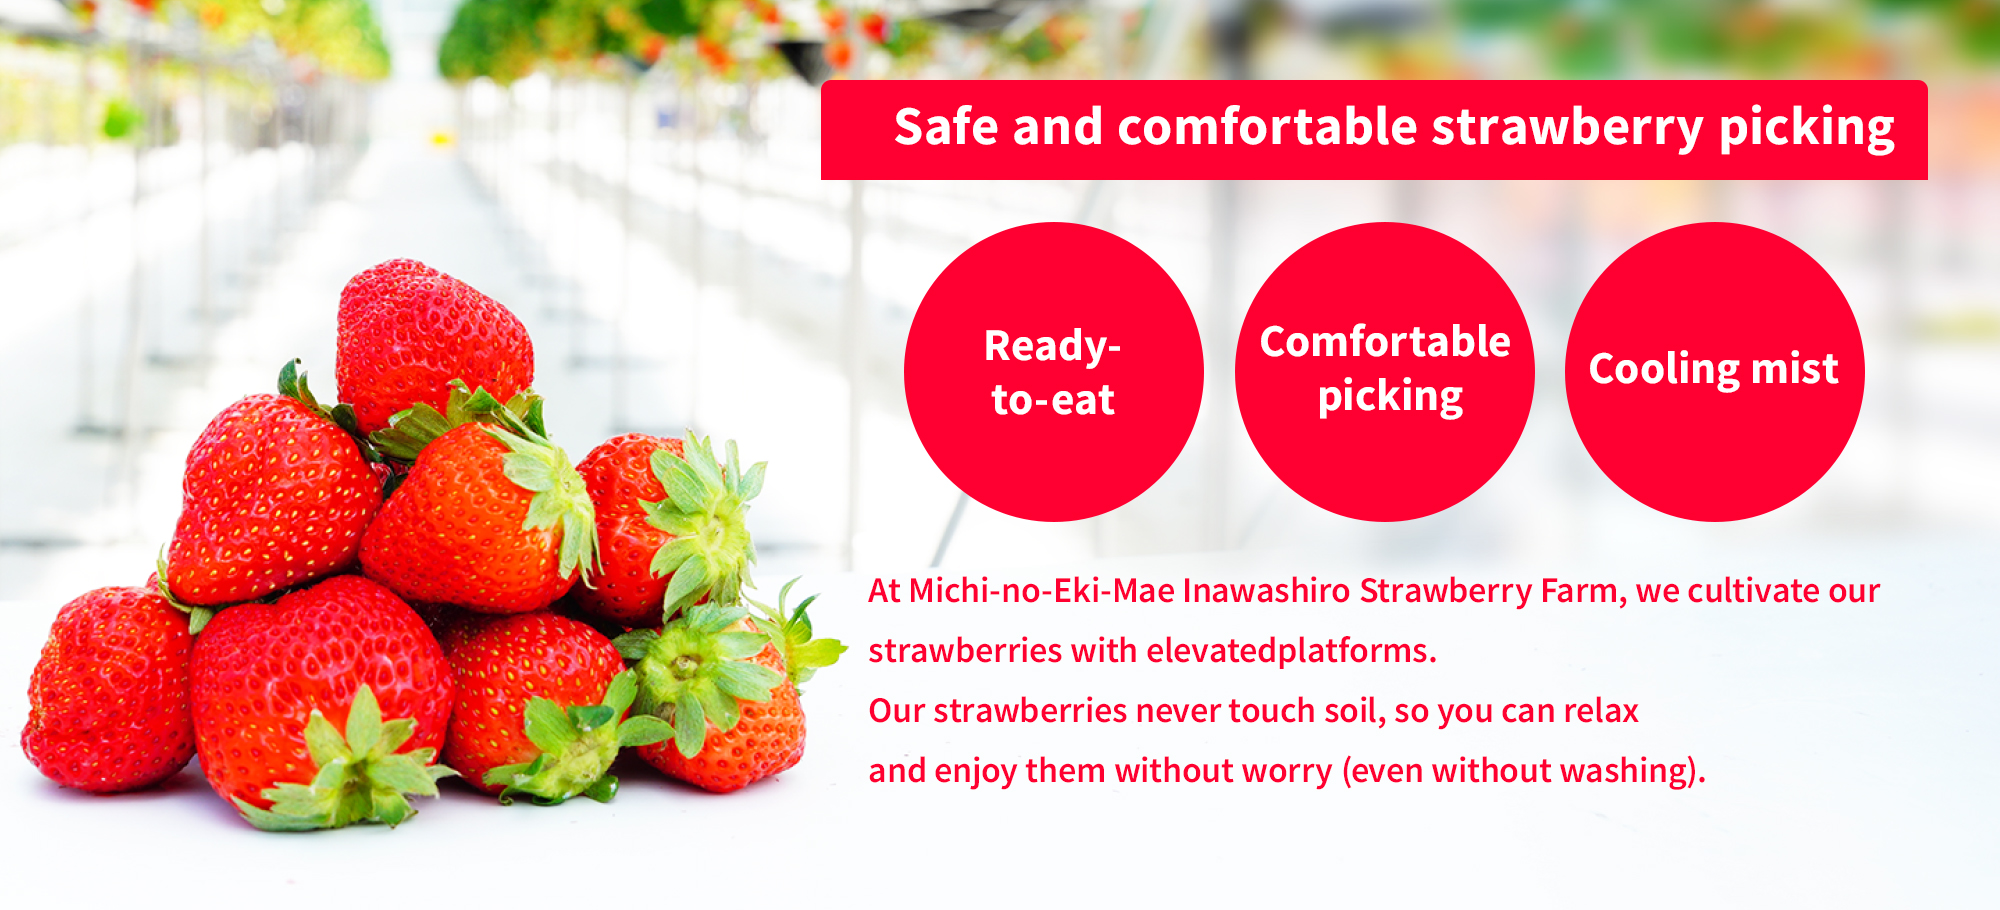 Safe and comfortable strawberry picking at Michi-no-Eki-Mae Inawashiro Strawberry Farm